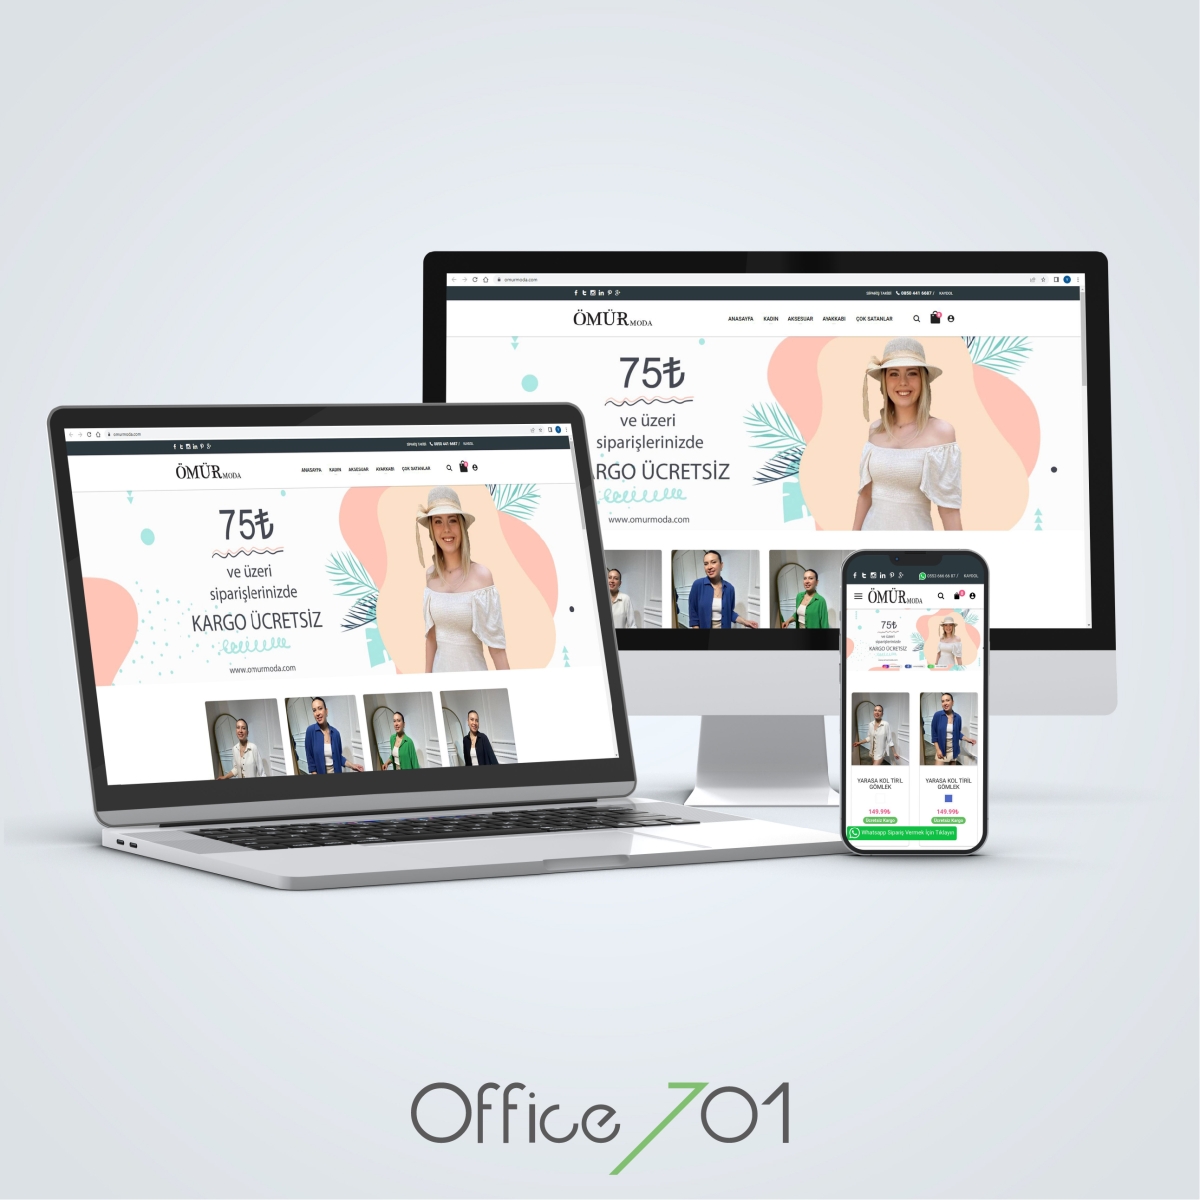 Office701 | Ömür Moda | Clothing Fashion E-Commerce Website